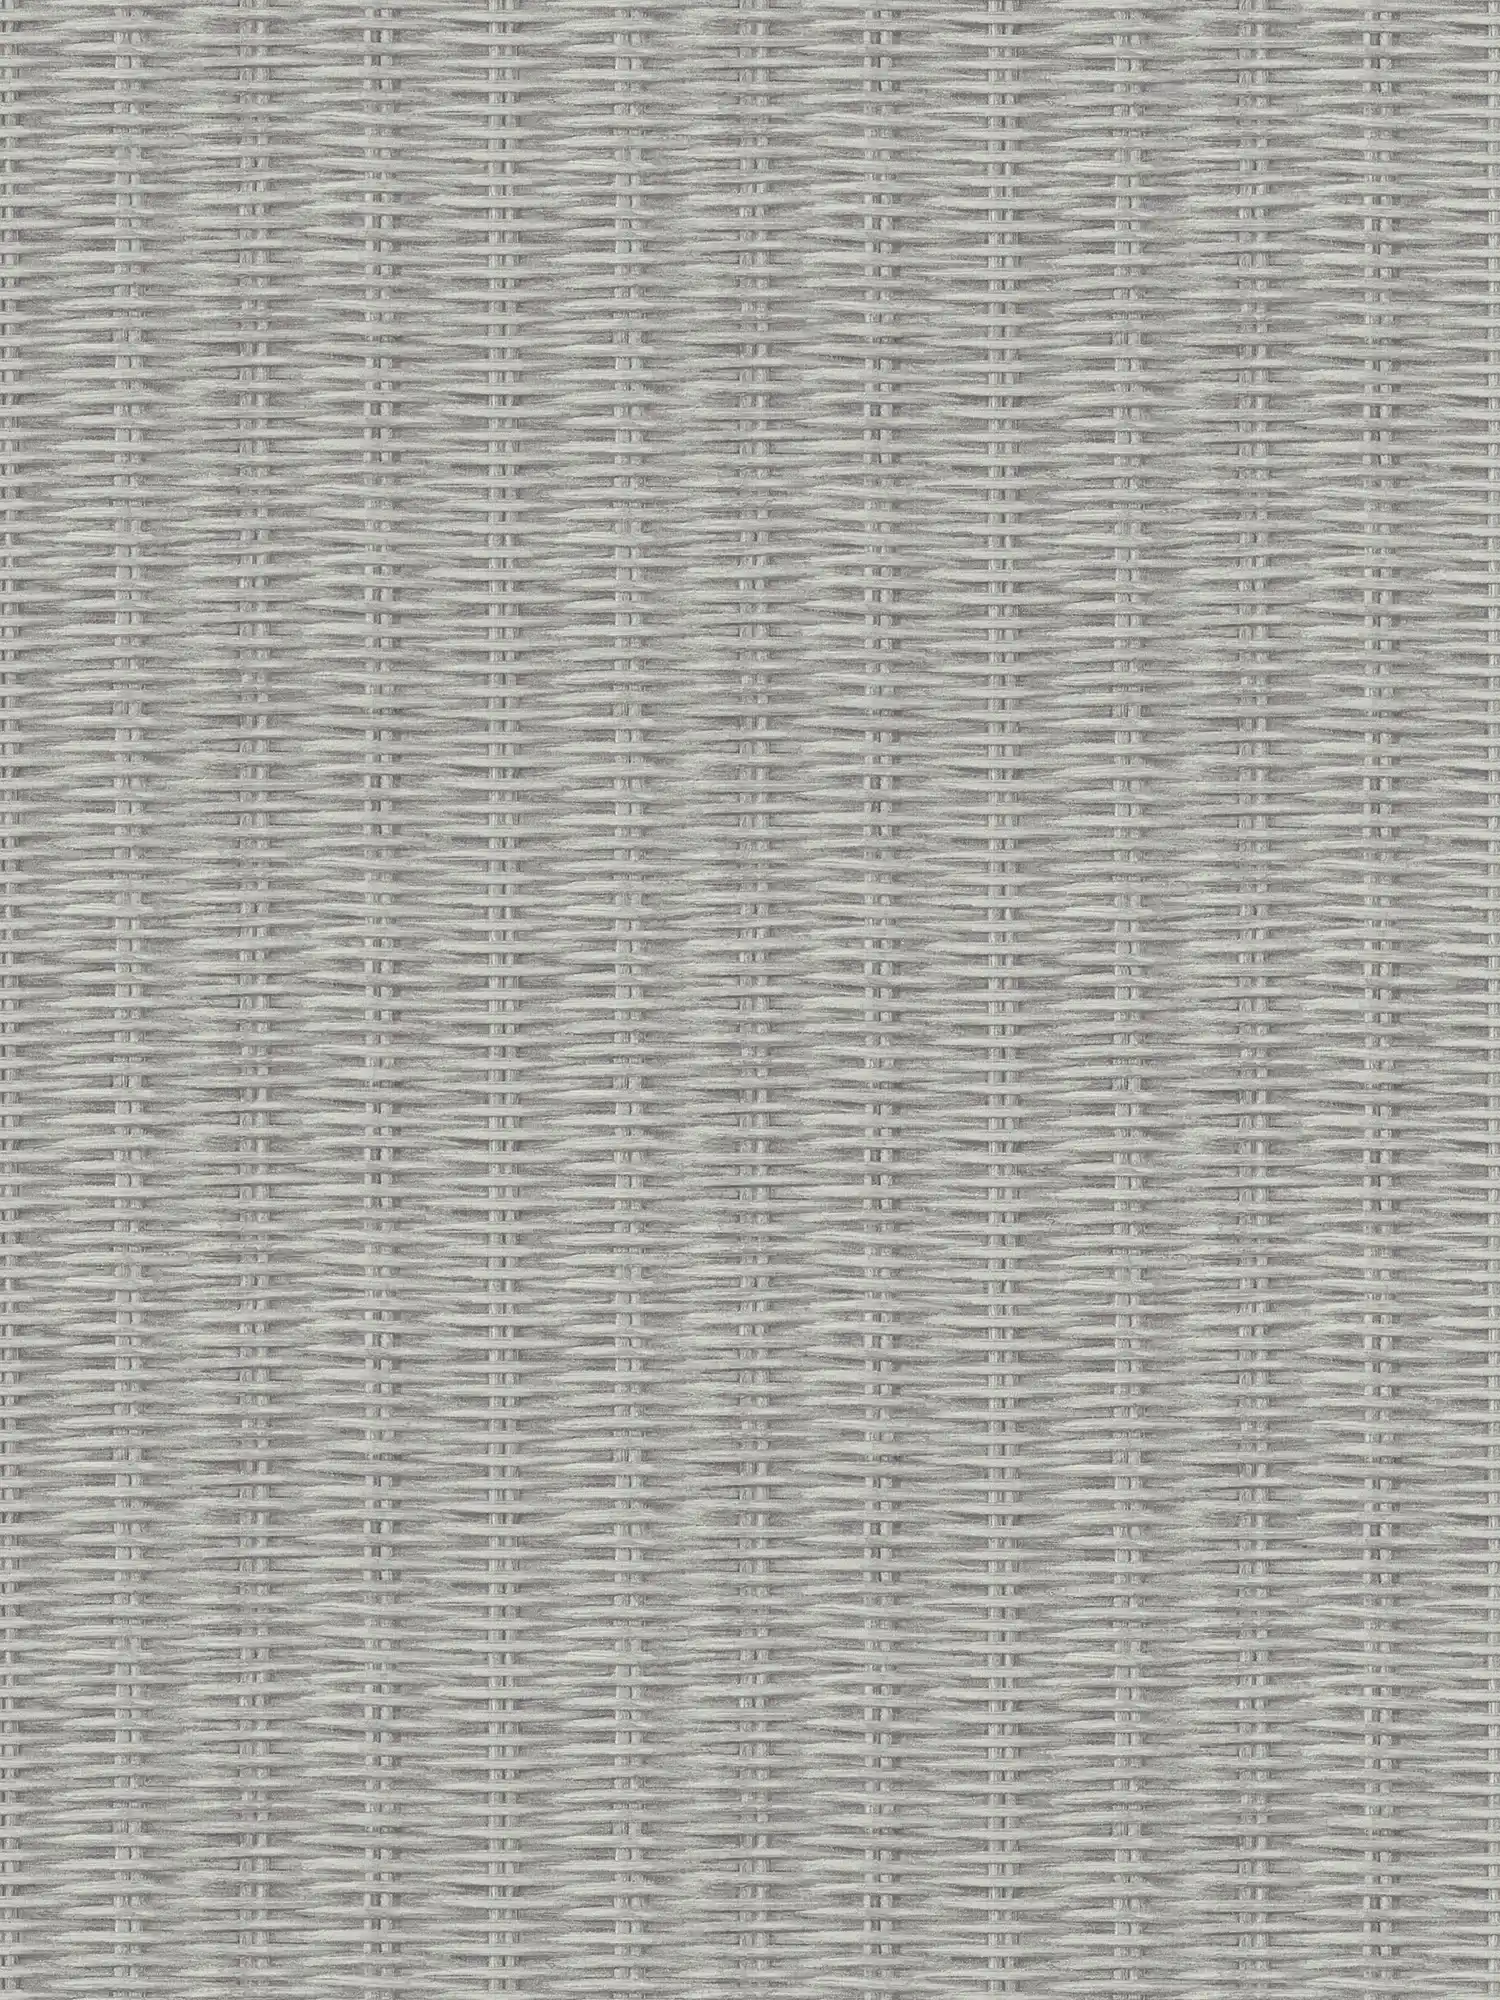 Non-woven wallpaper basket weave, natural look - grey
